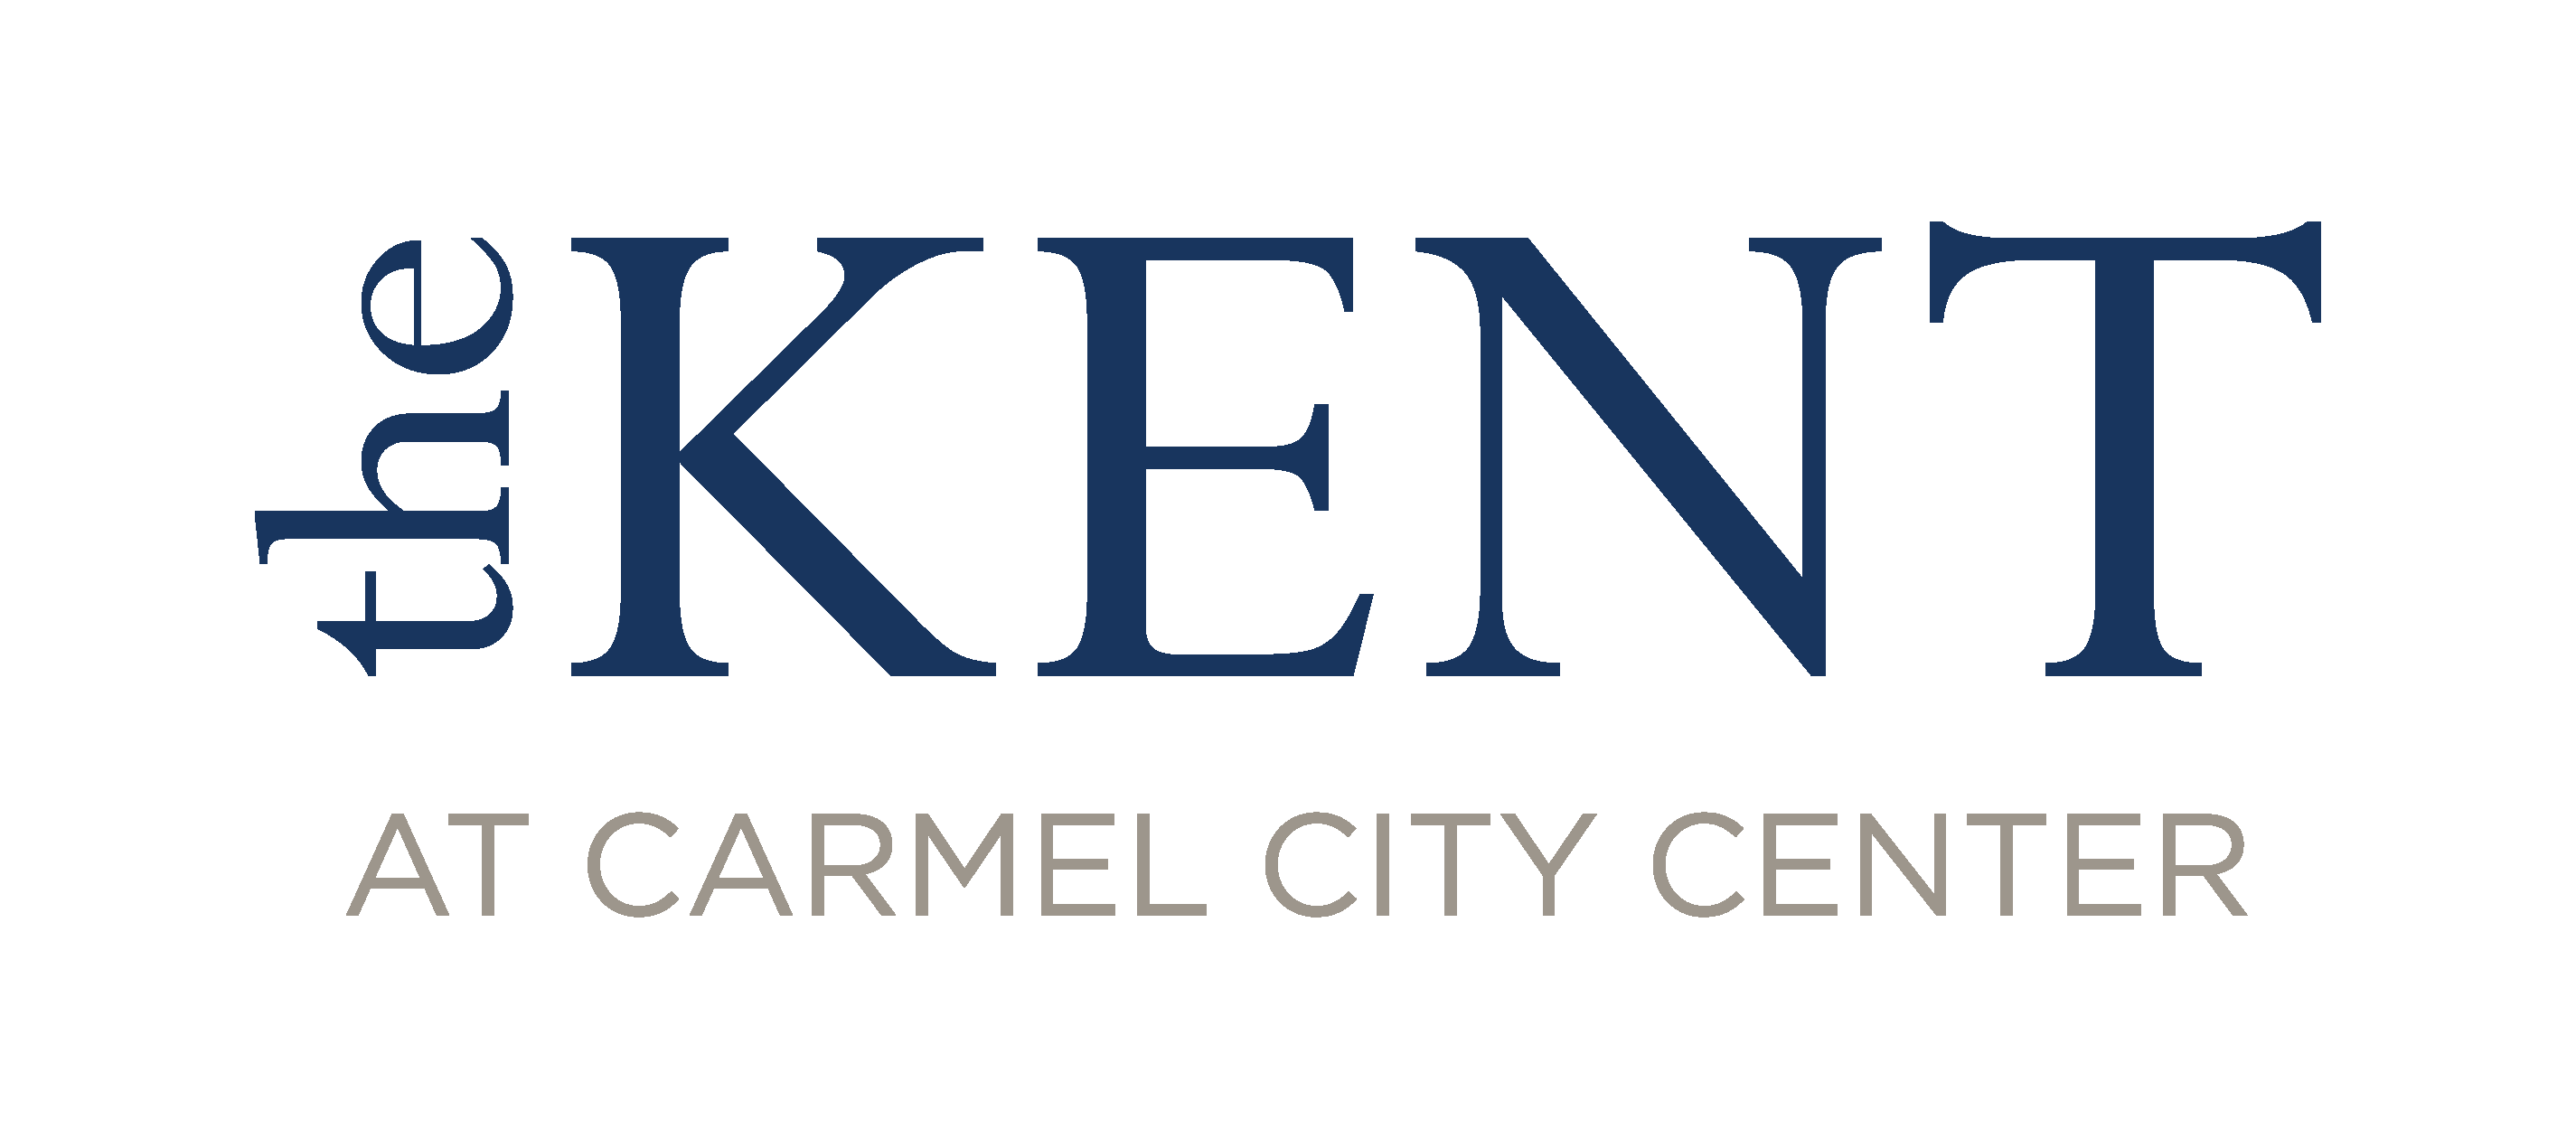 The Kent at Carmel City Center logo